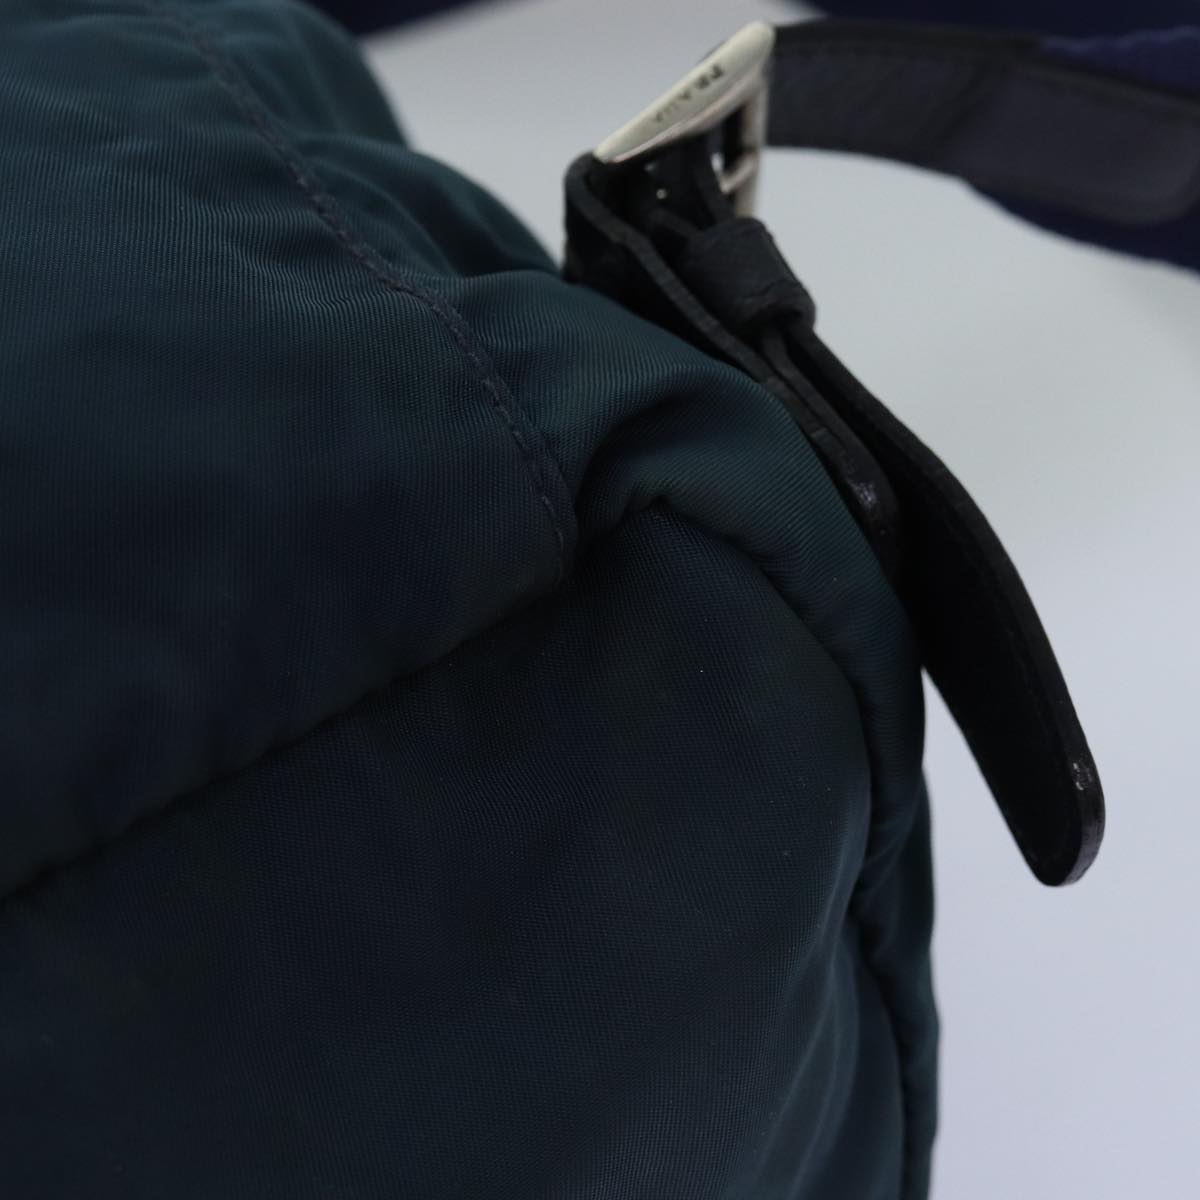 PRADA Backpack Nylon Green Auth 74575